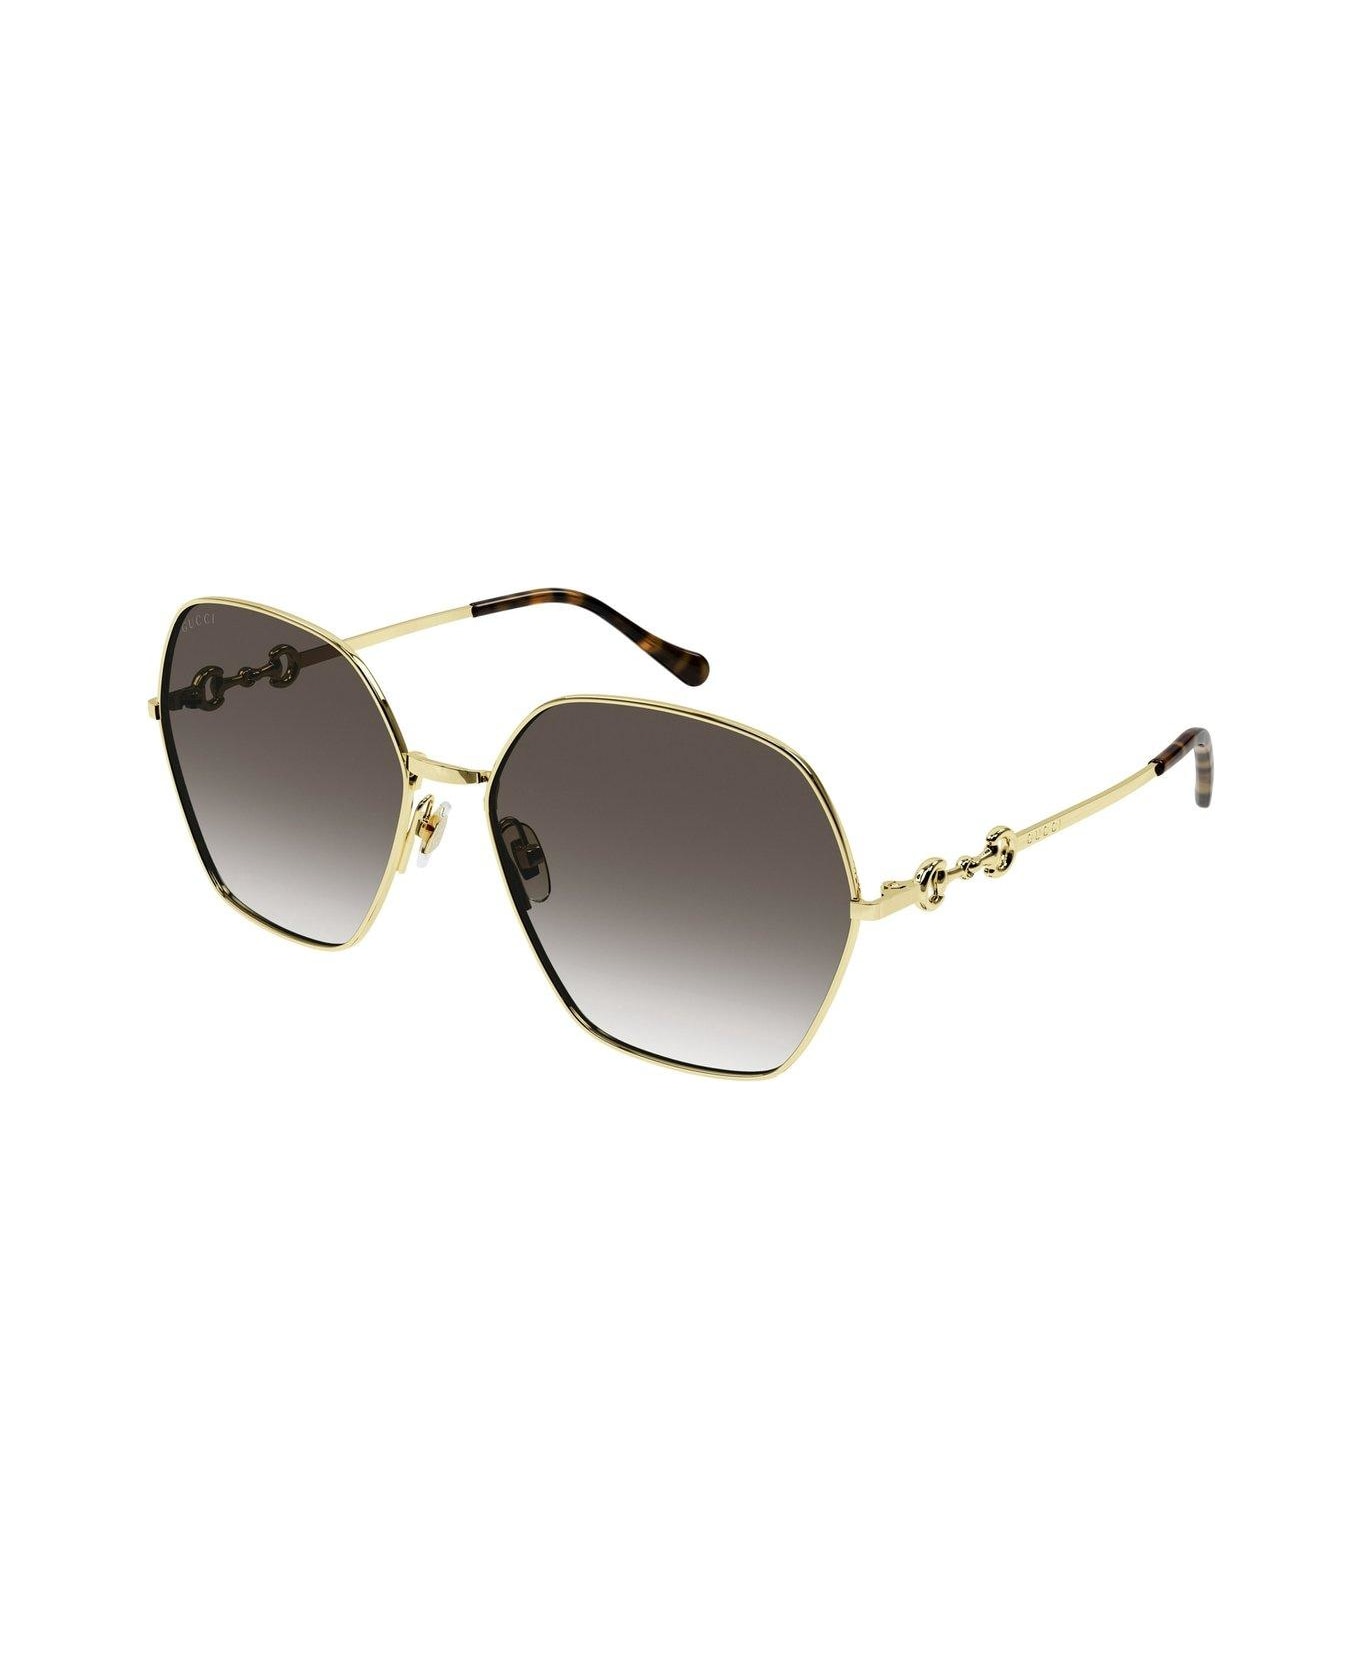 Gucci Eyewear Round Frame Sunglasses Sunglasses - 002 GOLD GOLD BROWN サングラス